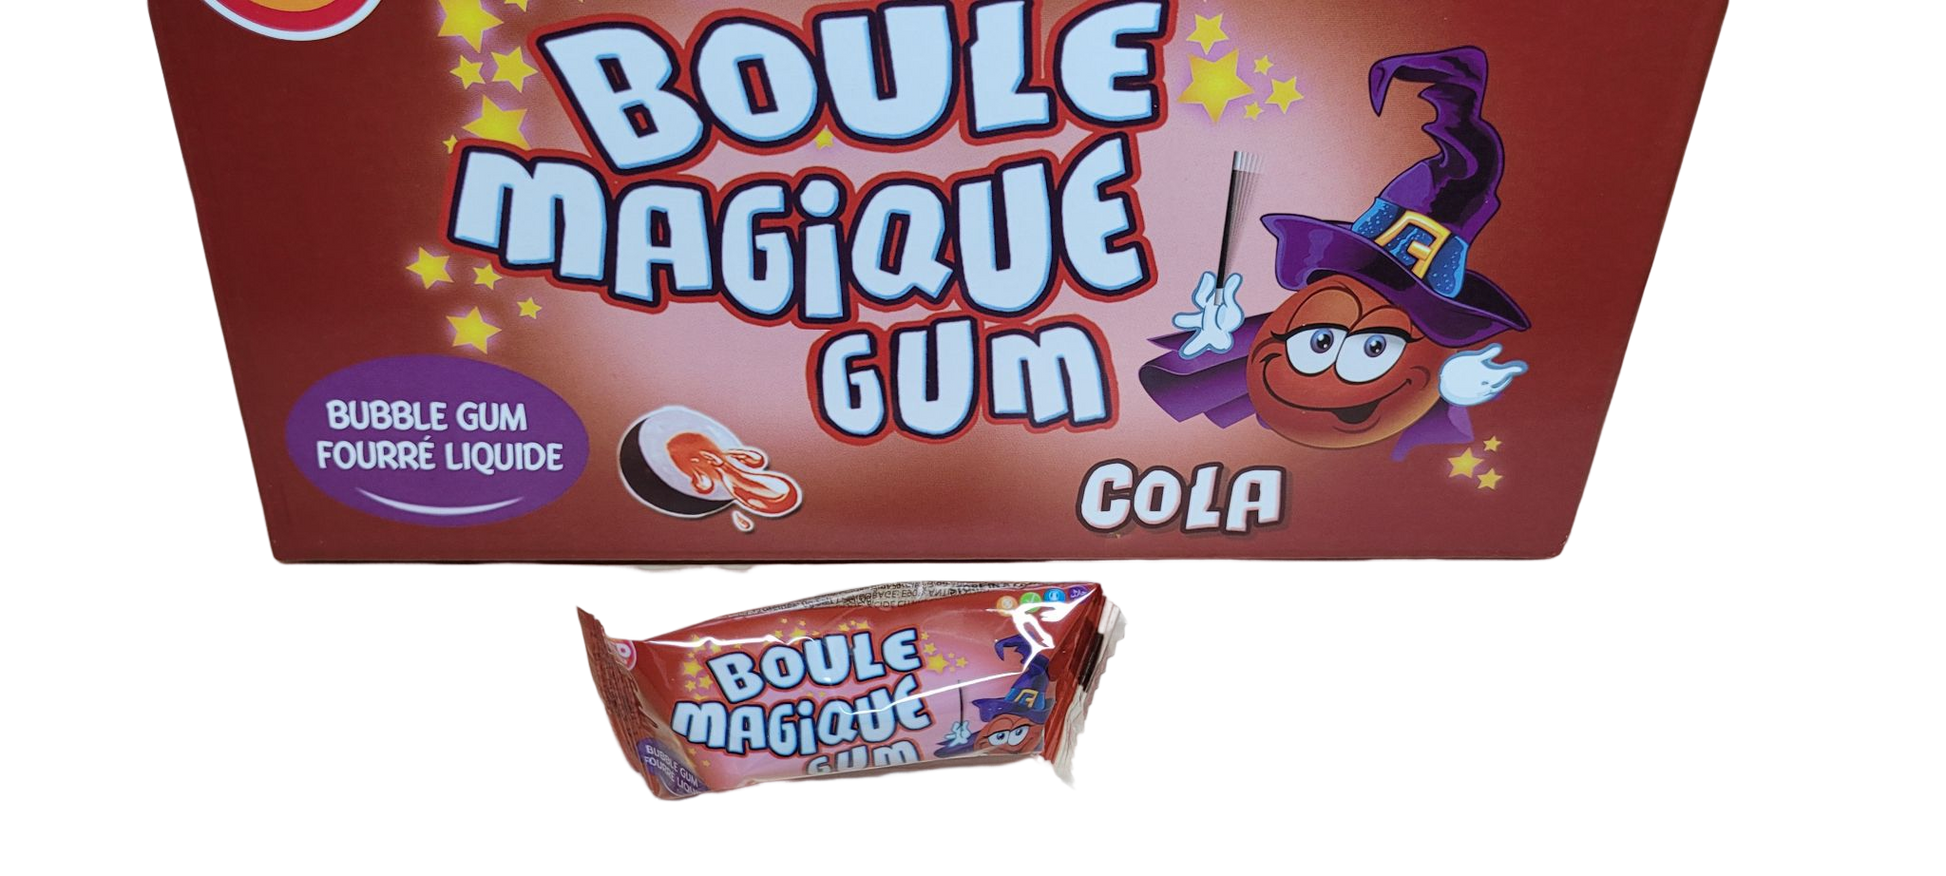 Boule magique cola - Bonbons /Bonbons chewing-gum - la-reserve-de-bonbons